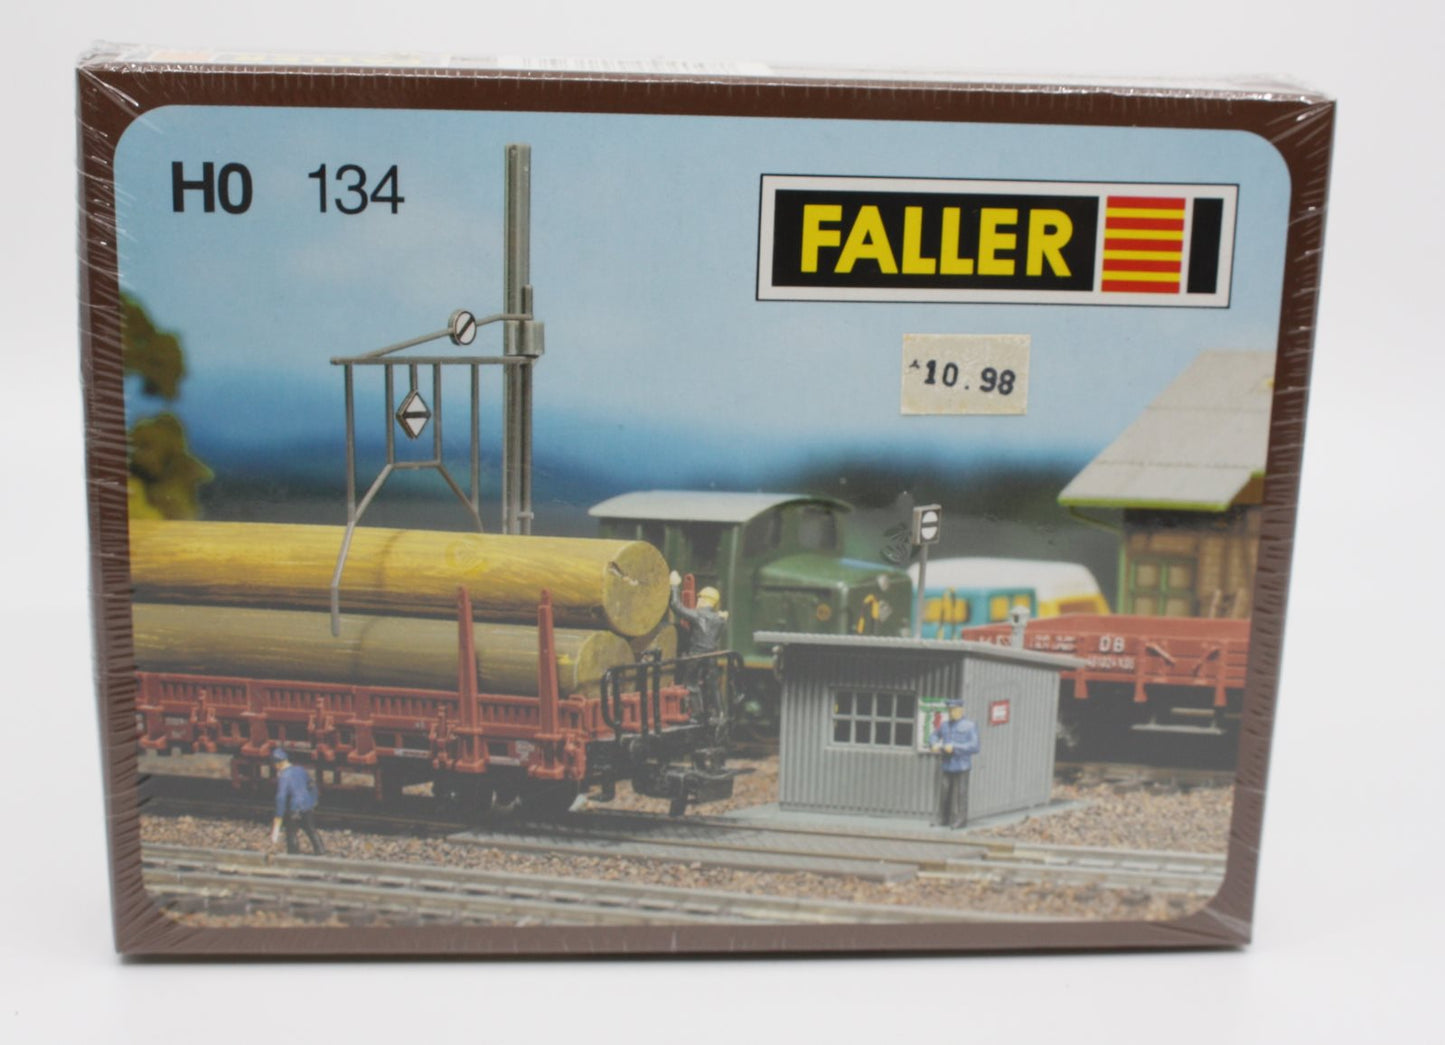 Faller 134 HO Railway Bridge Kit